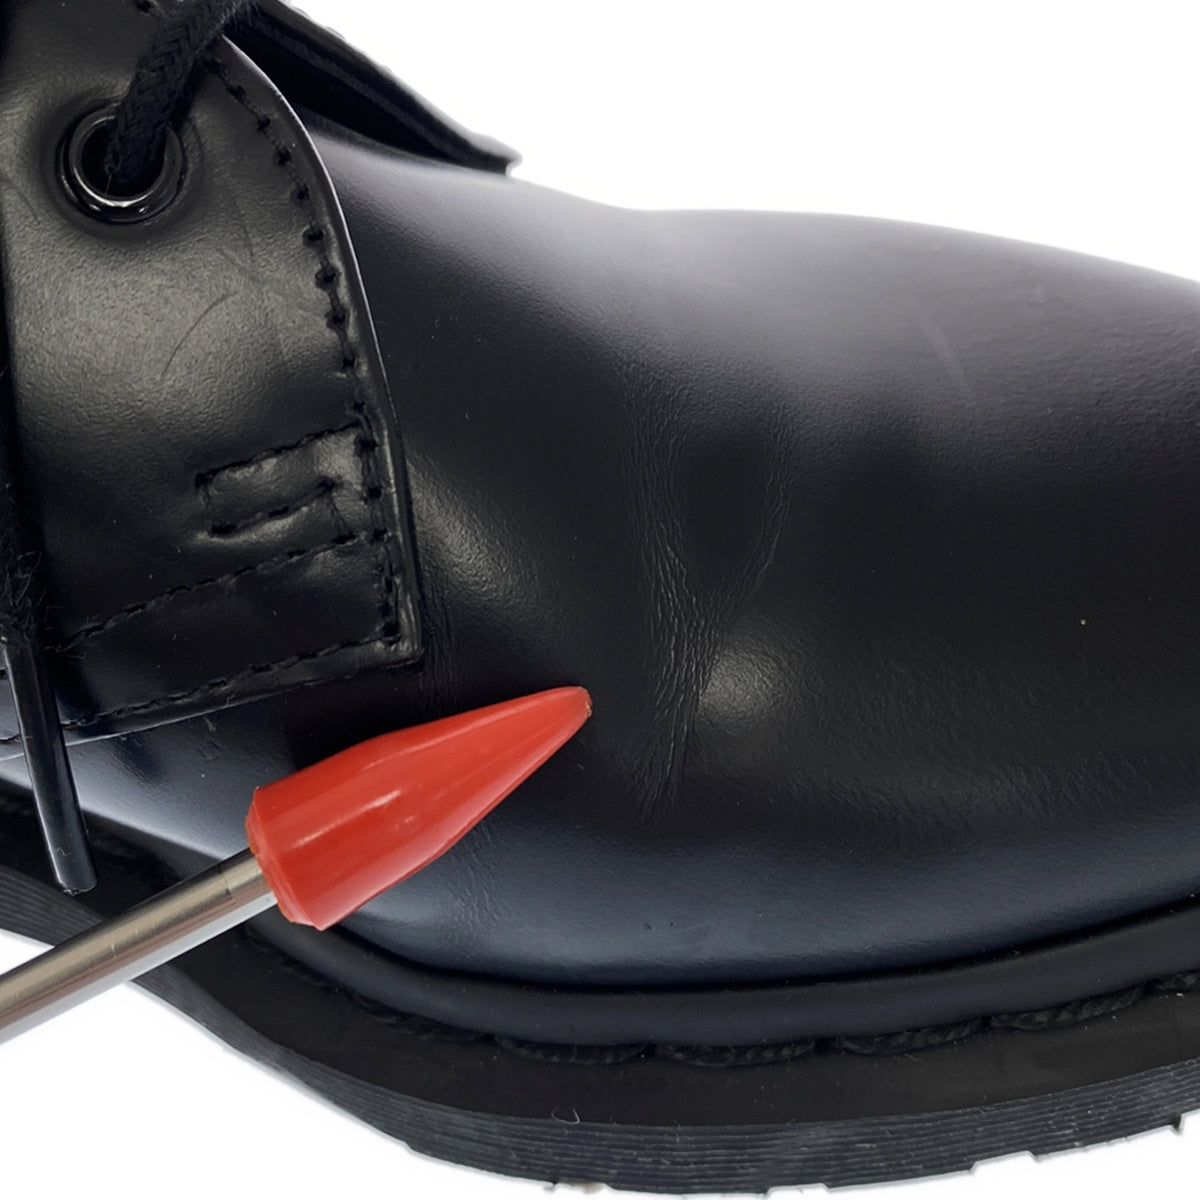 Dr.Martens / ドクターマーチン | 1461 MONO 3 EYELET SHOE / レースアップ レザーシューズ 革靴 | UK3 | レディース